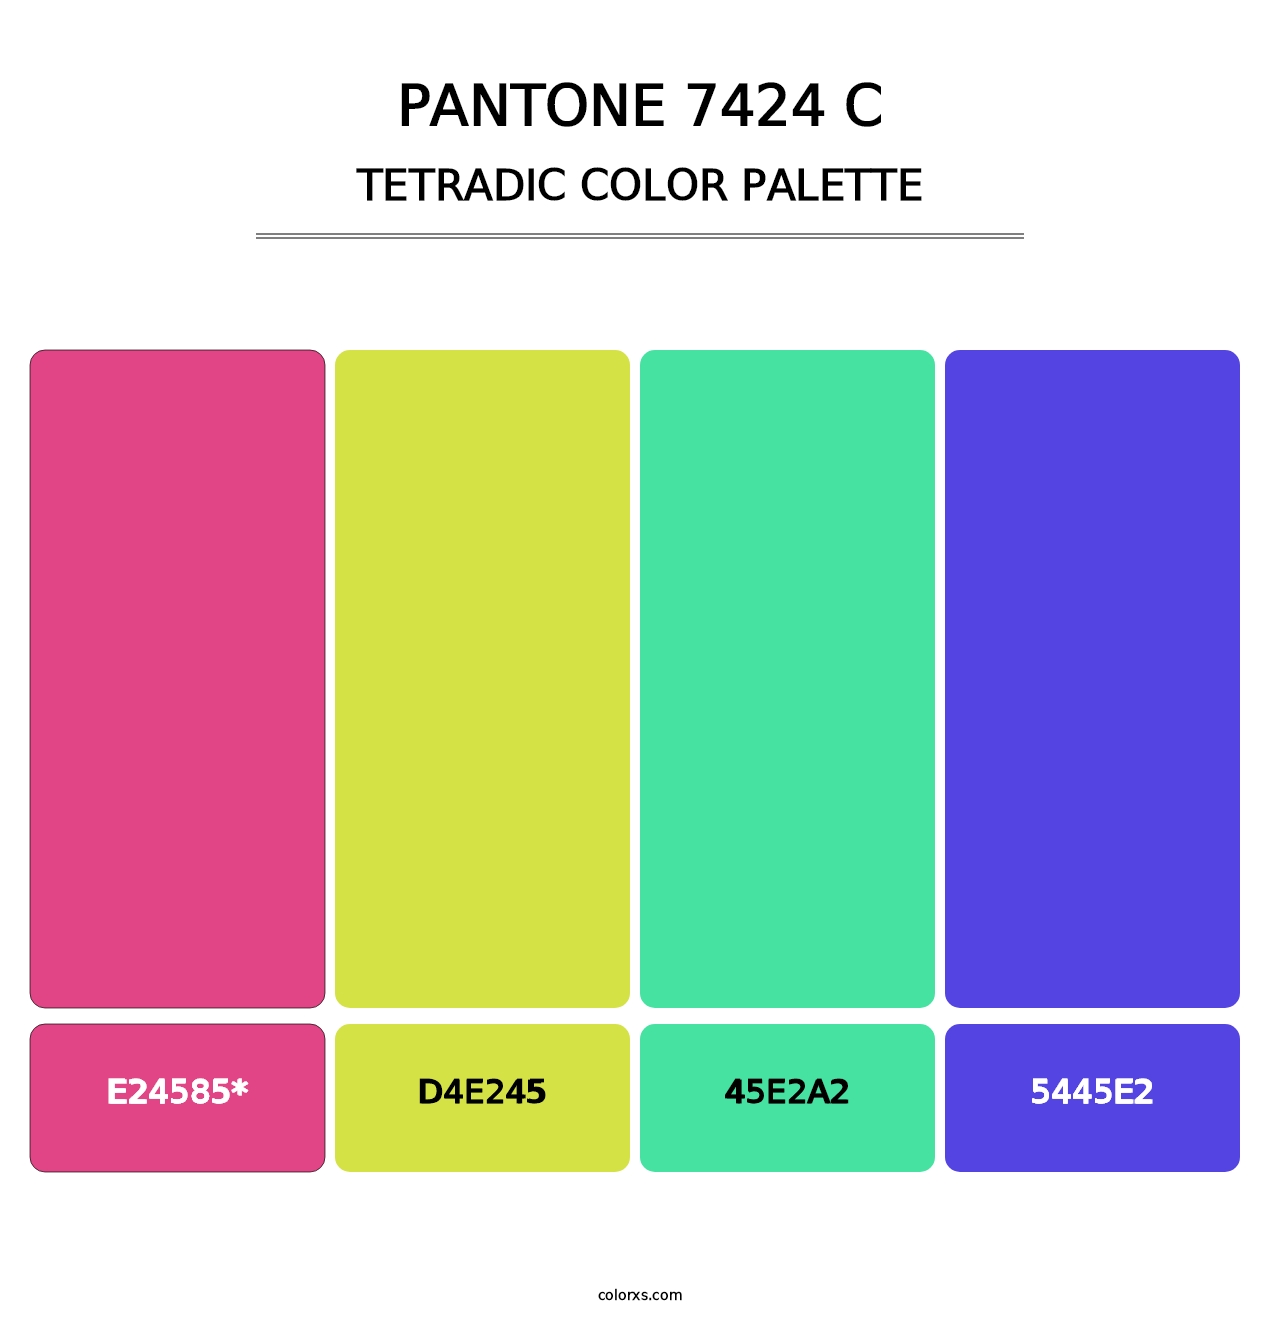 PANTONE 7424 C - Tetradic Color Palette